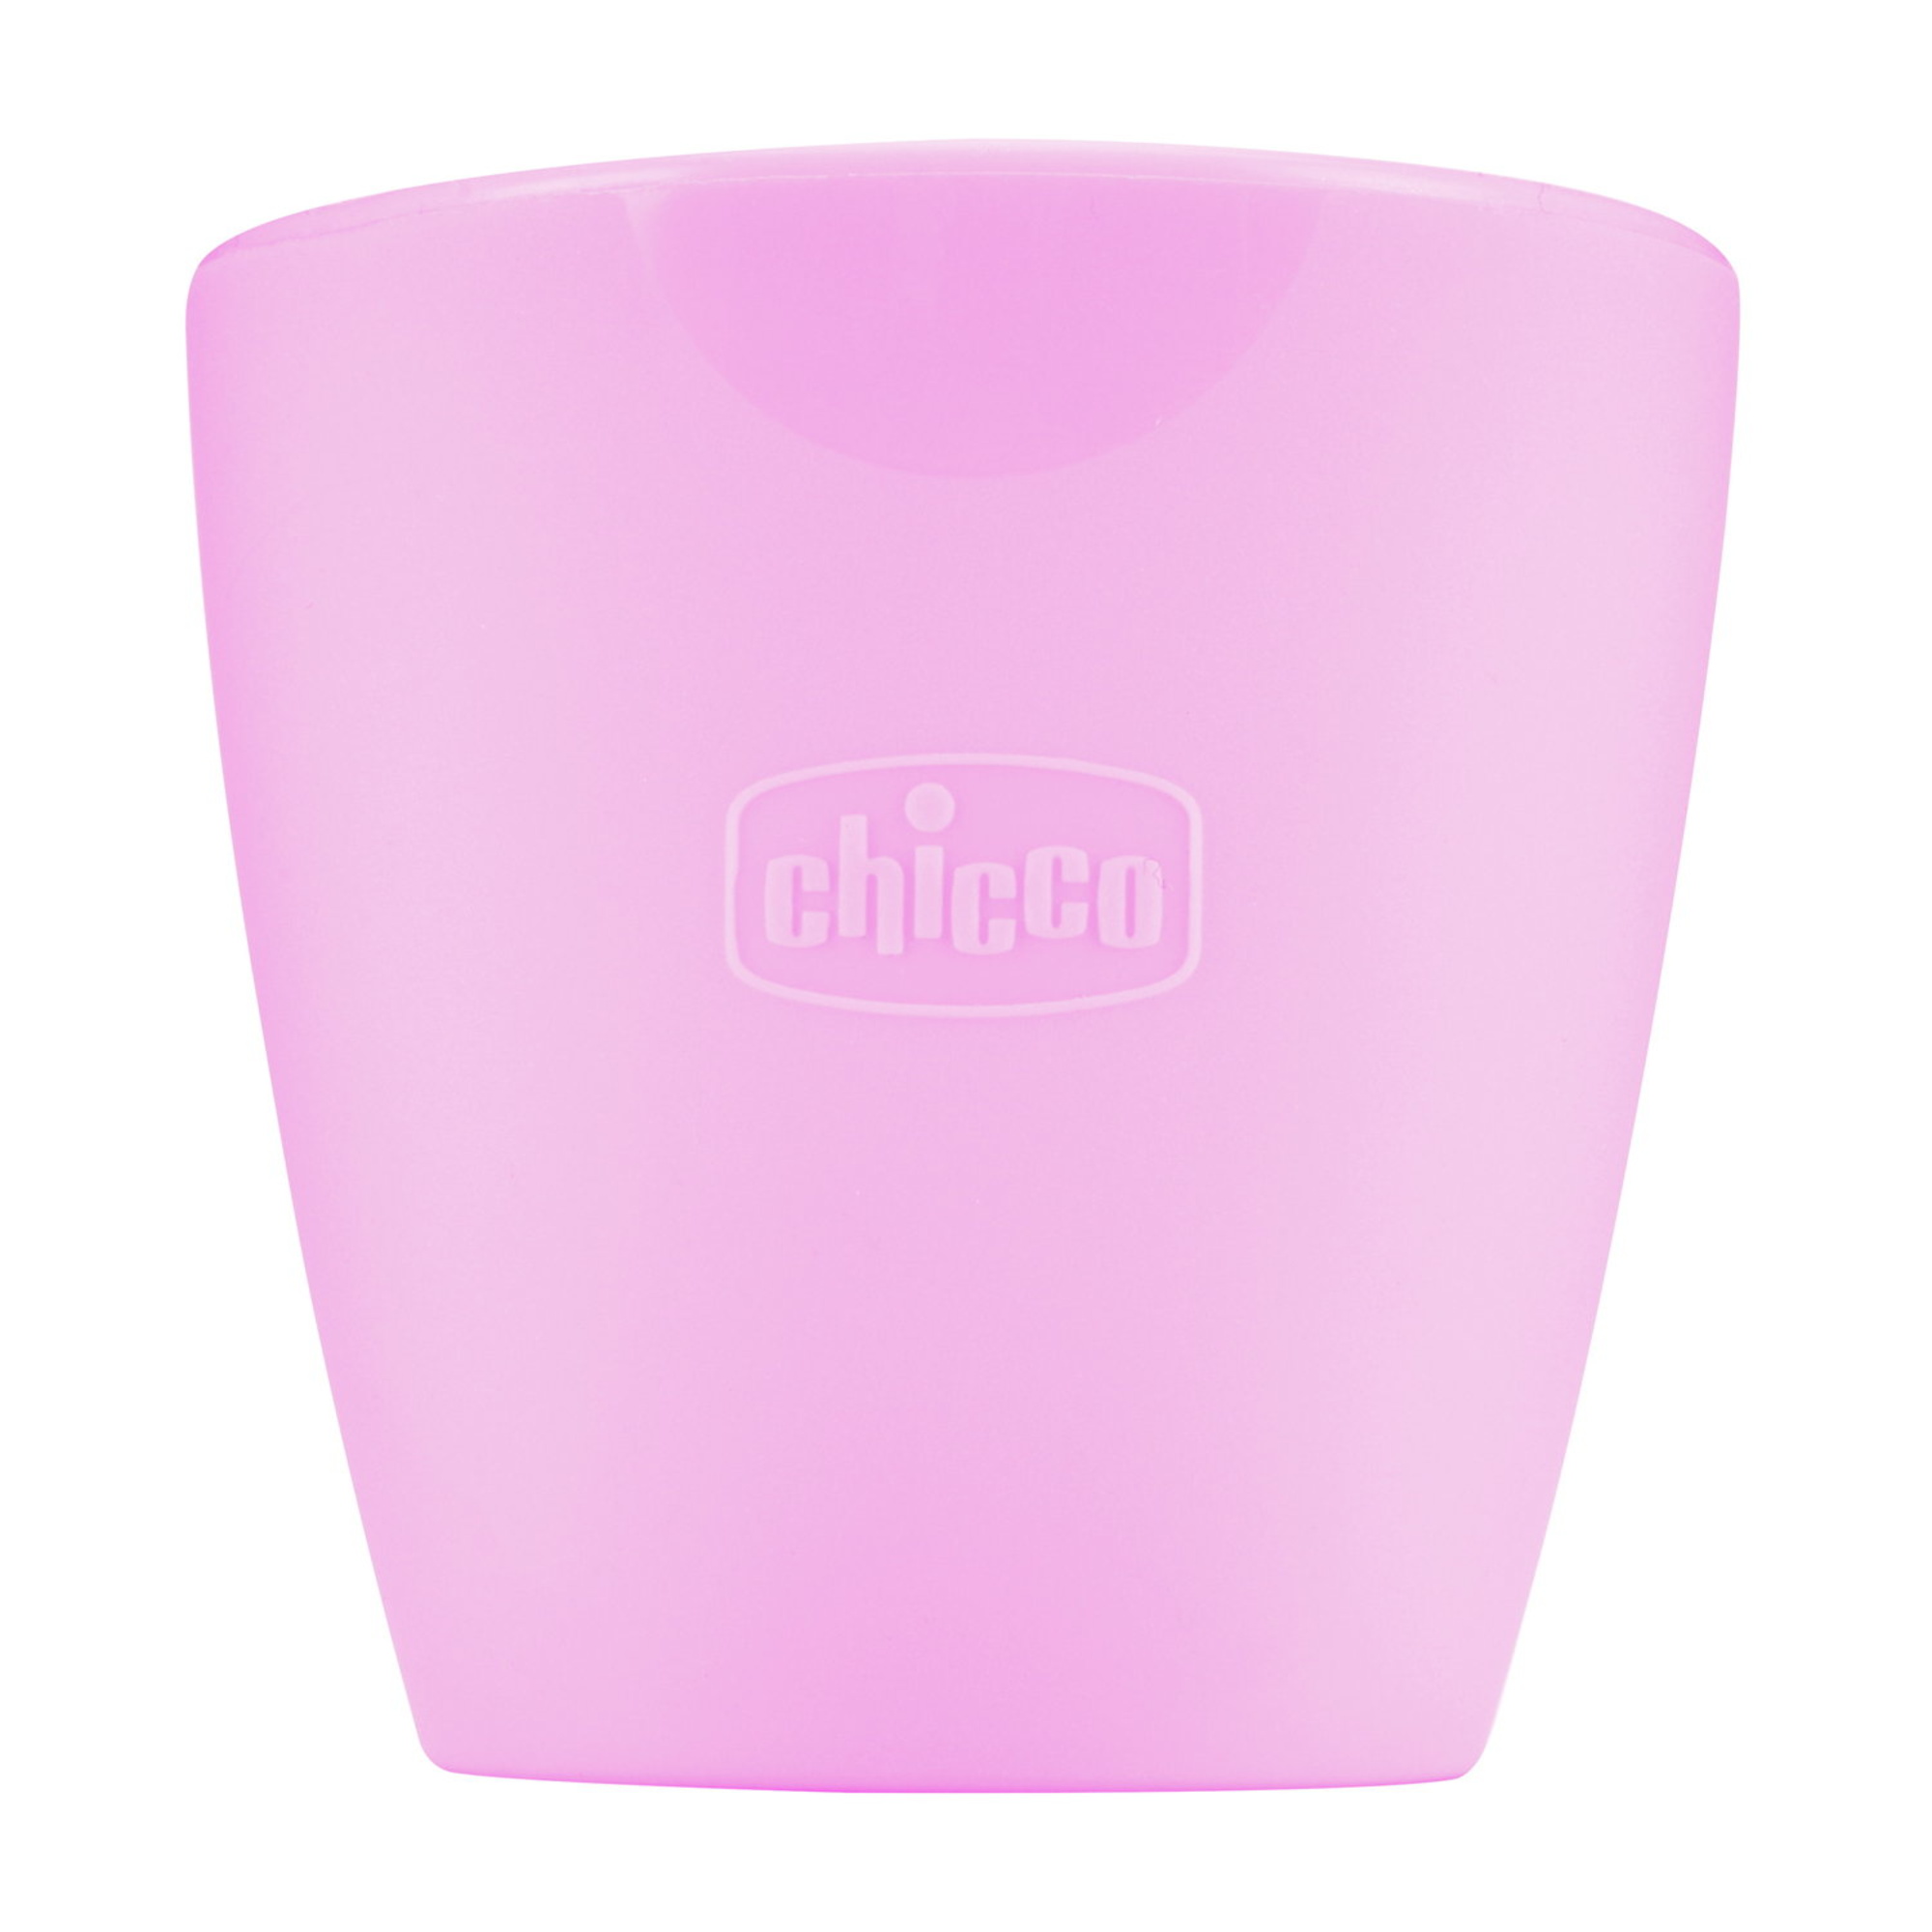 Bicchiere in silicone rosa - chicco - Chicco